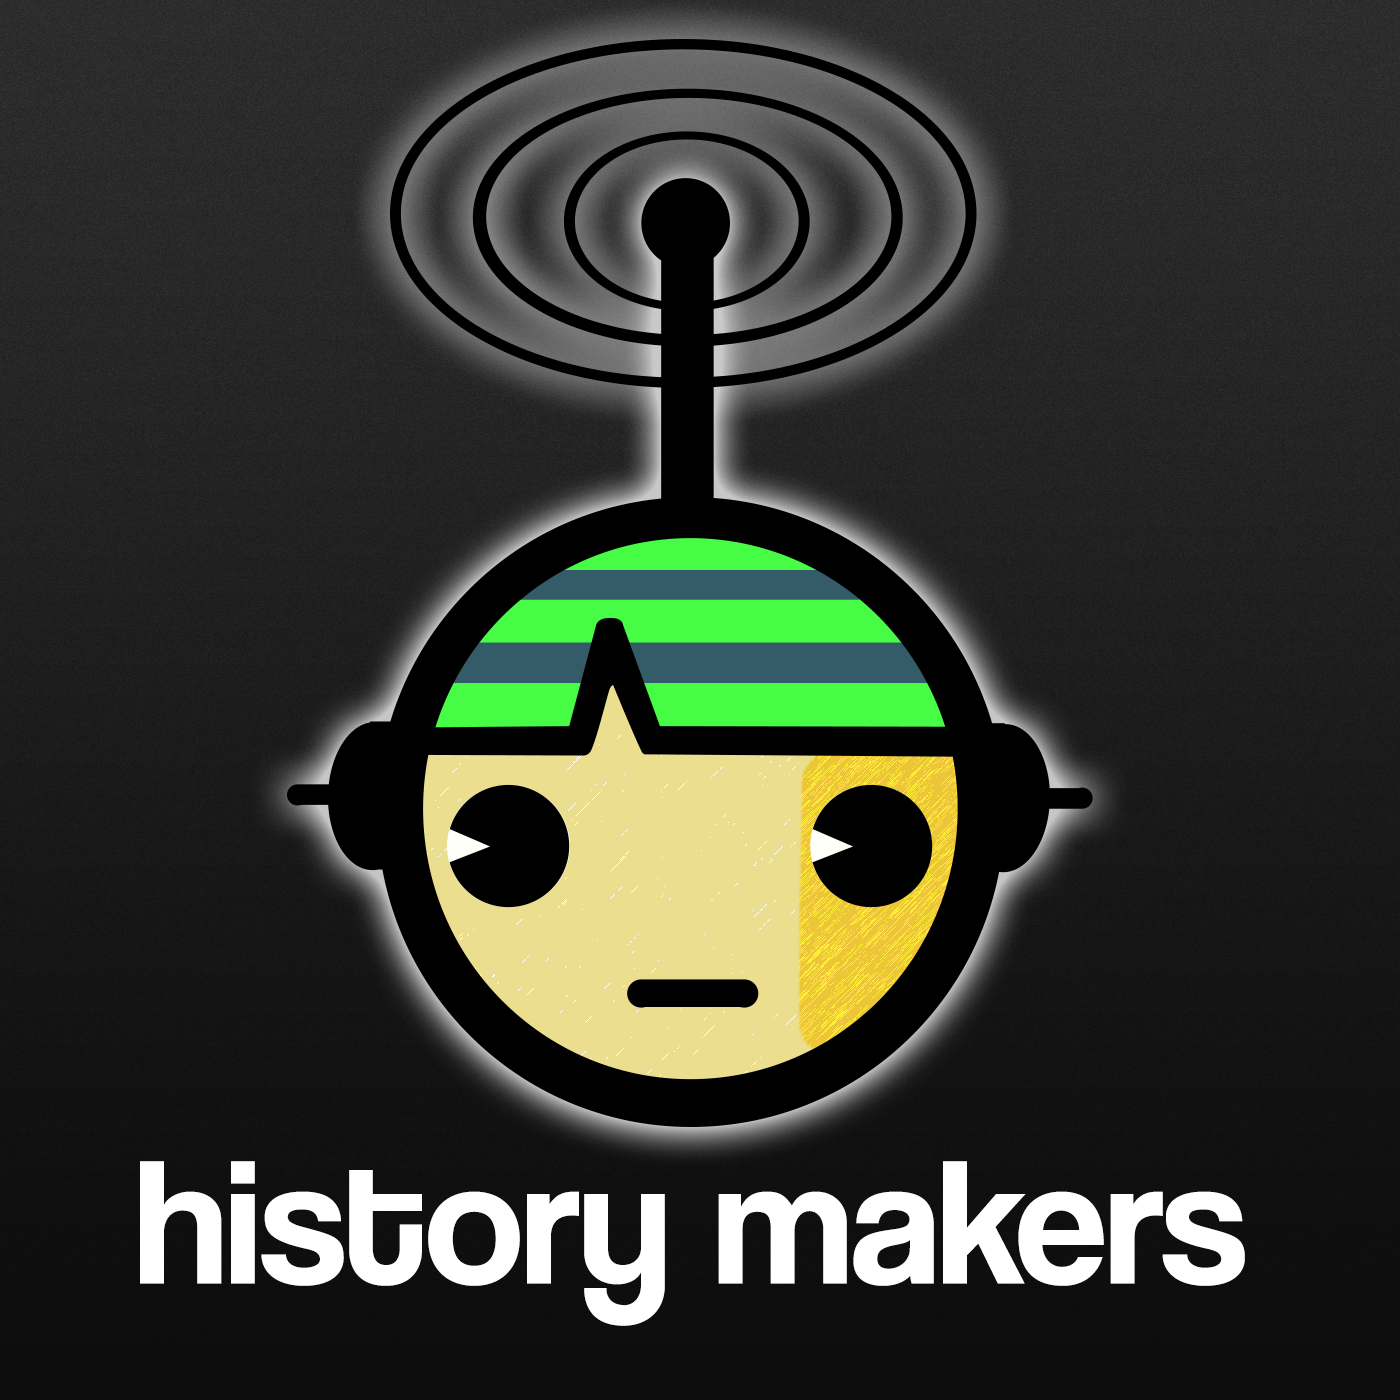 History Makers Radio